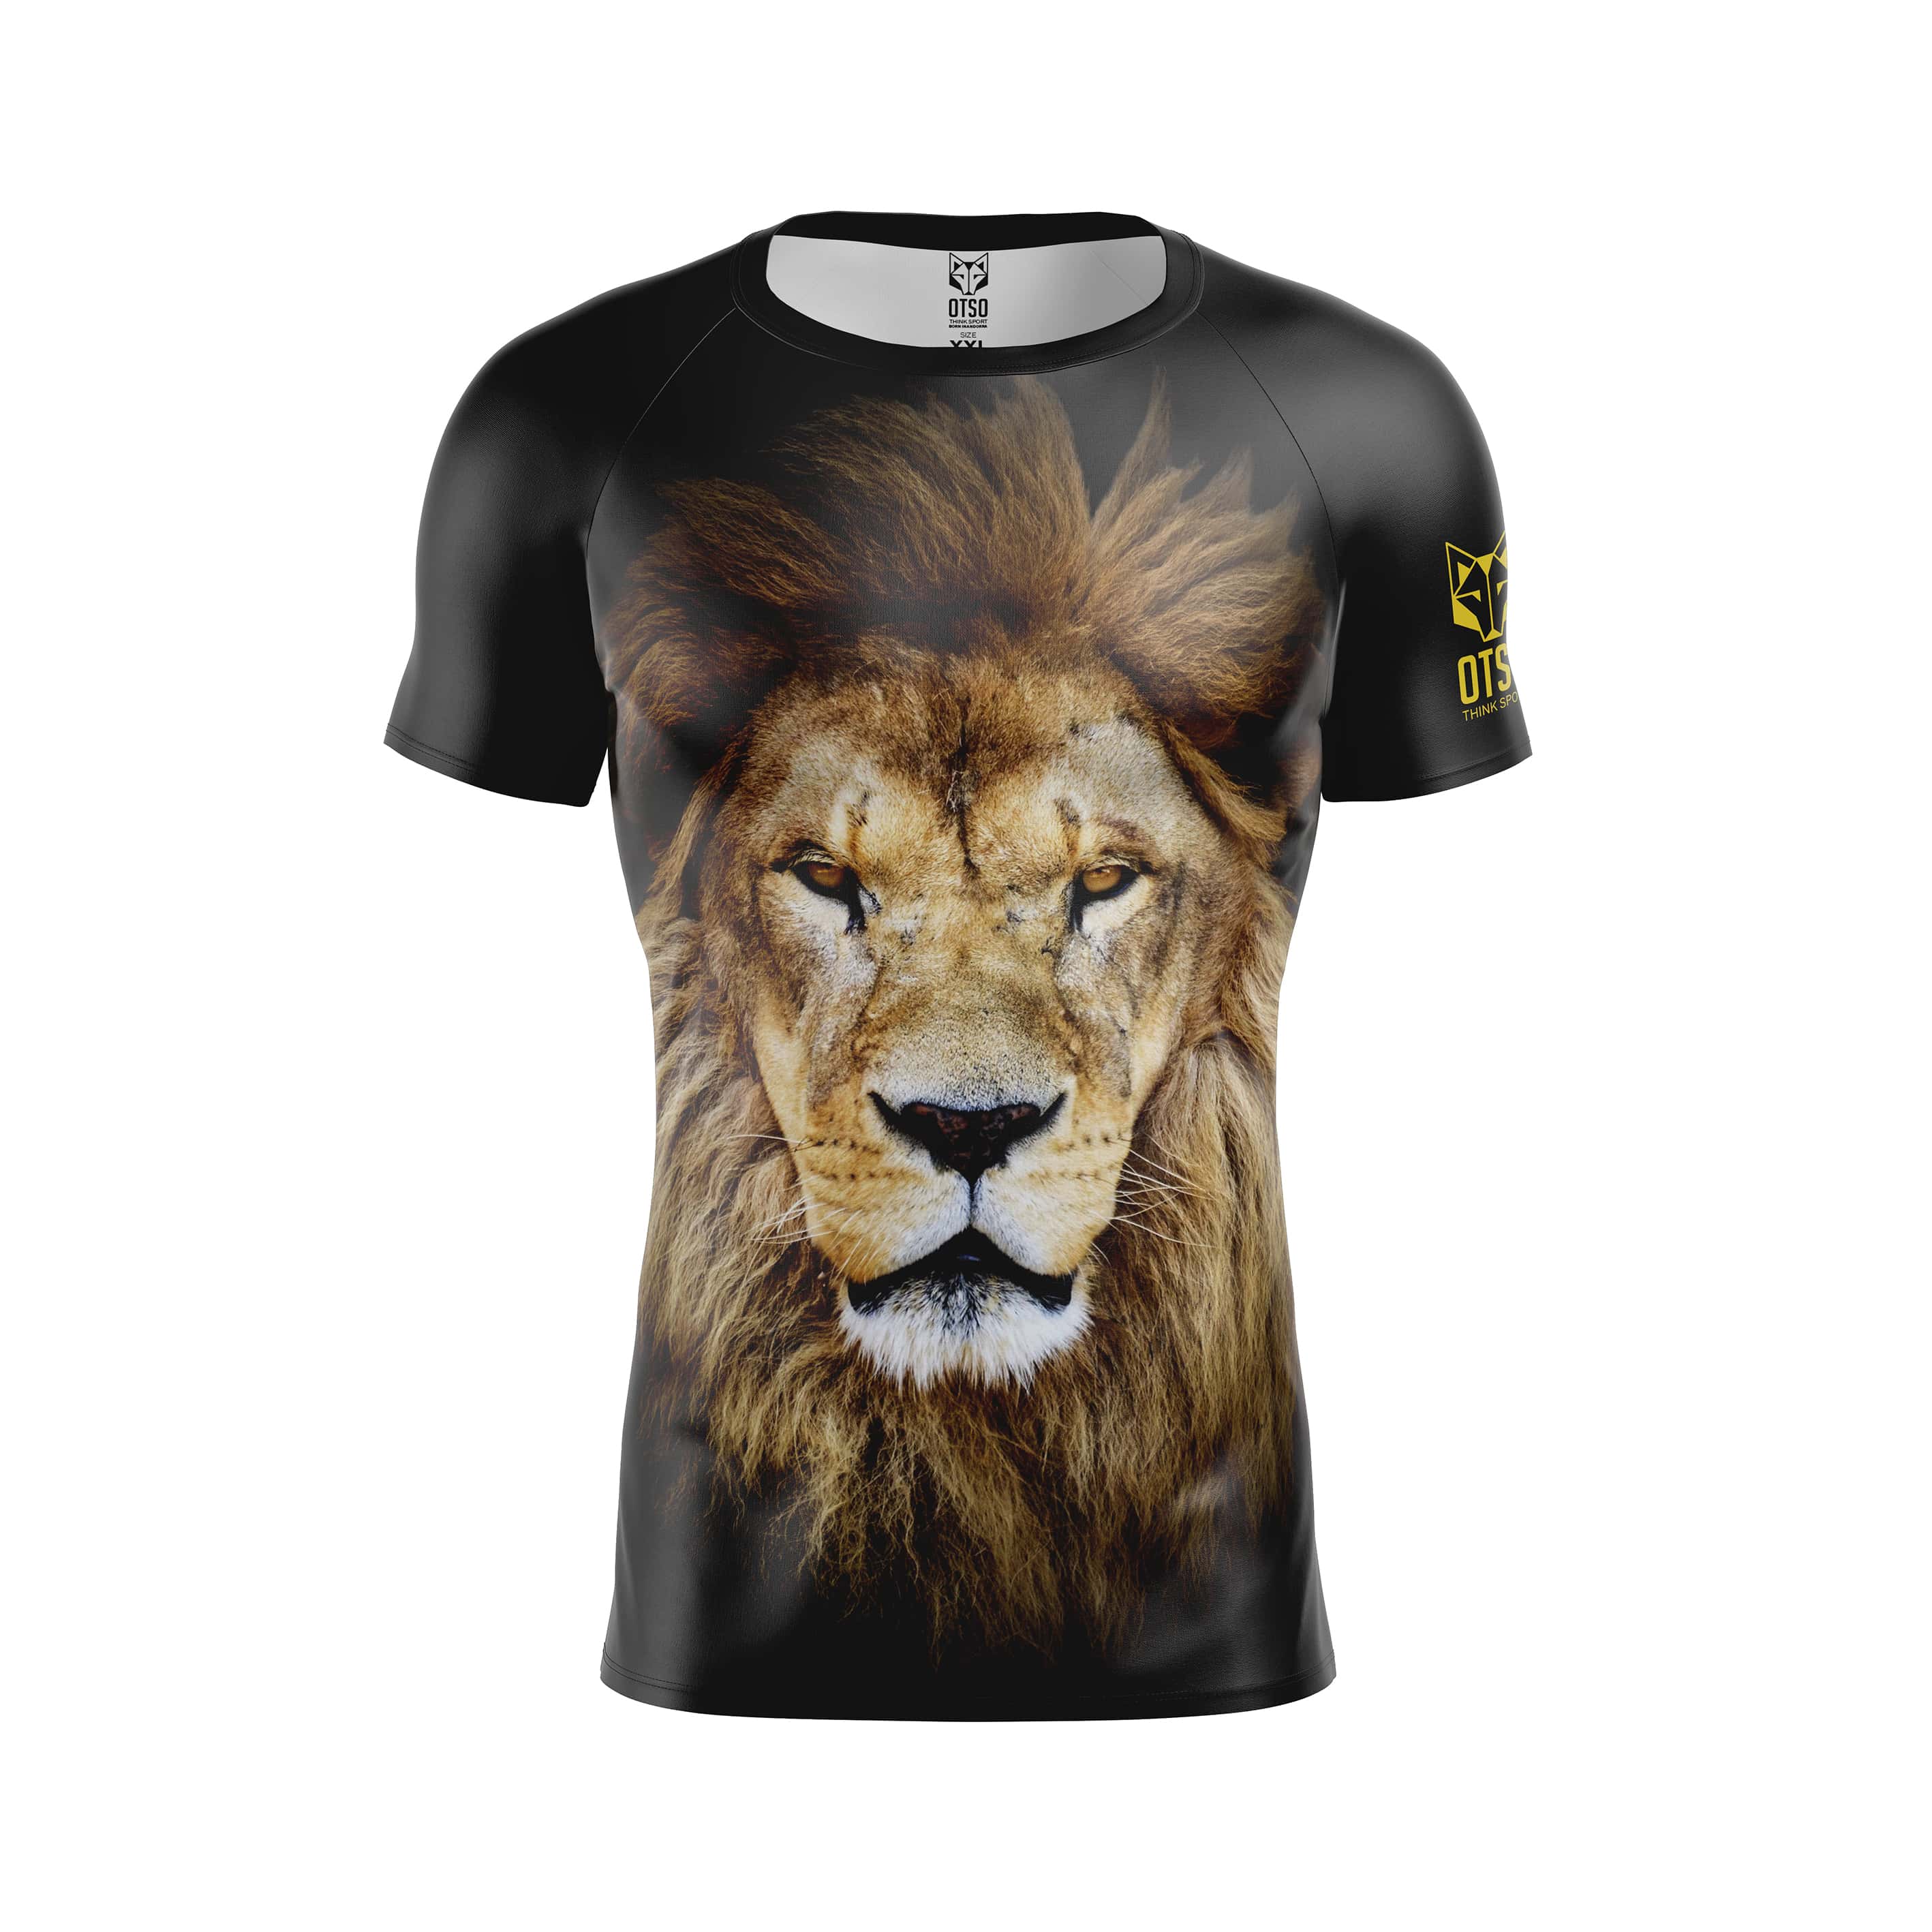 OTSO Sleeve Technical Running Shirt - Lion